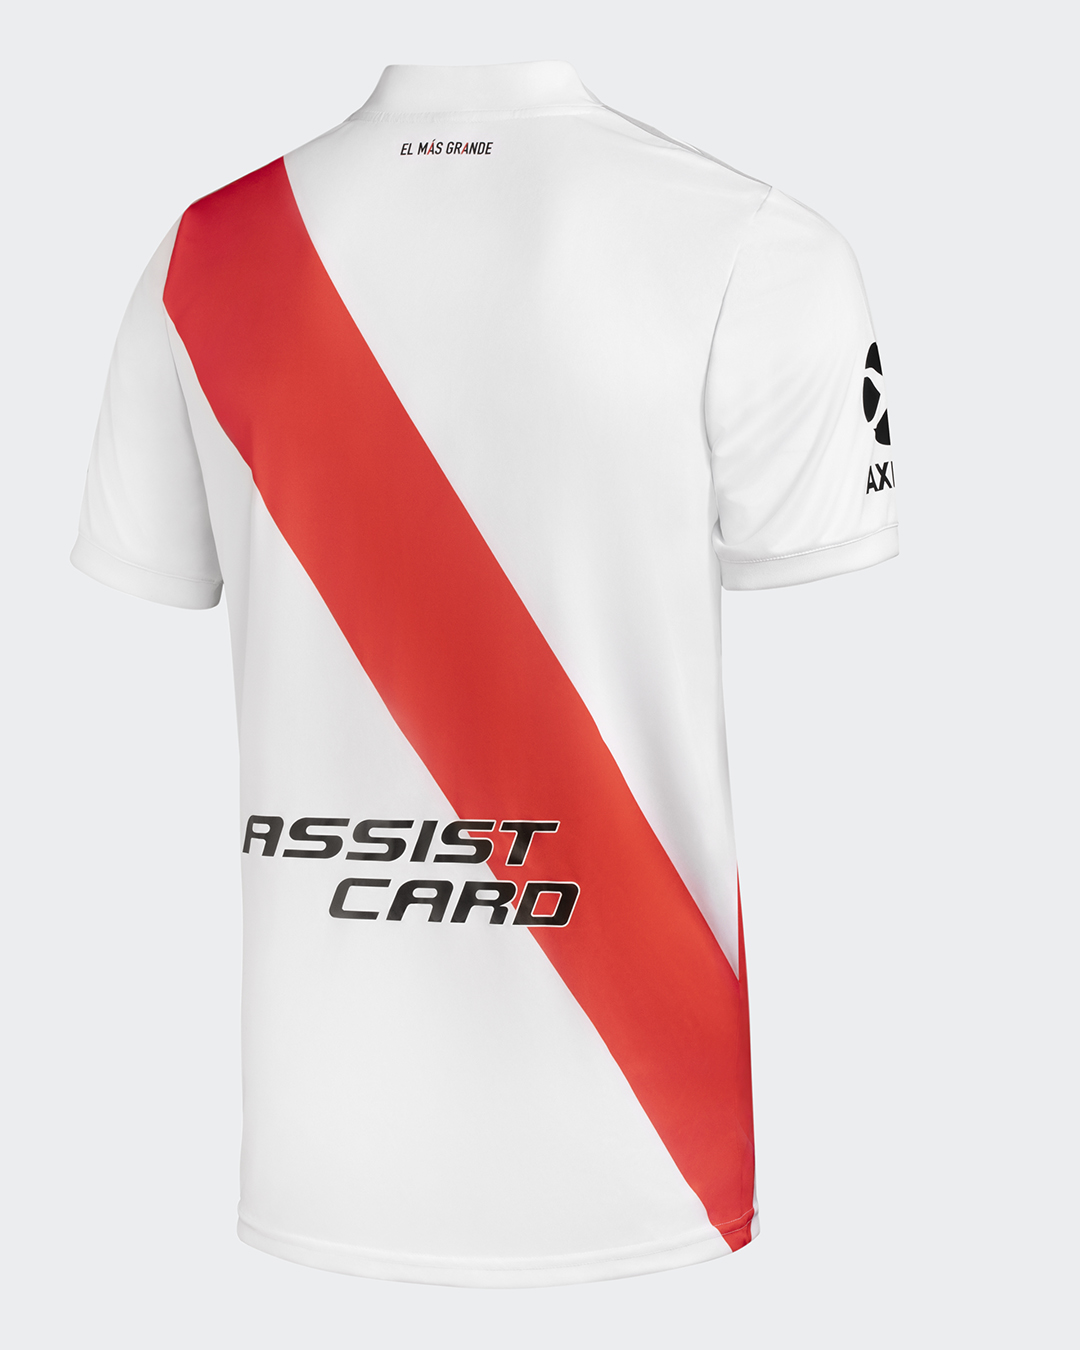 Camiseta titular adidas de River Plate 2020 2021